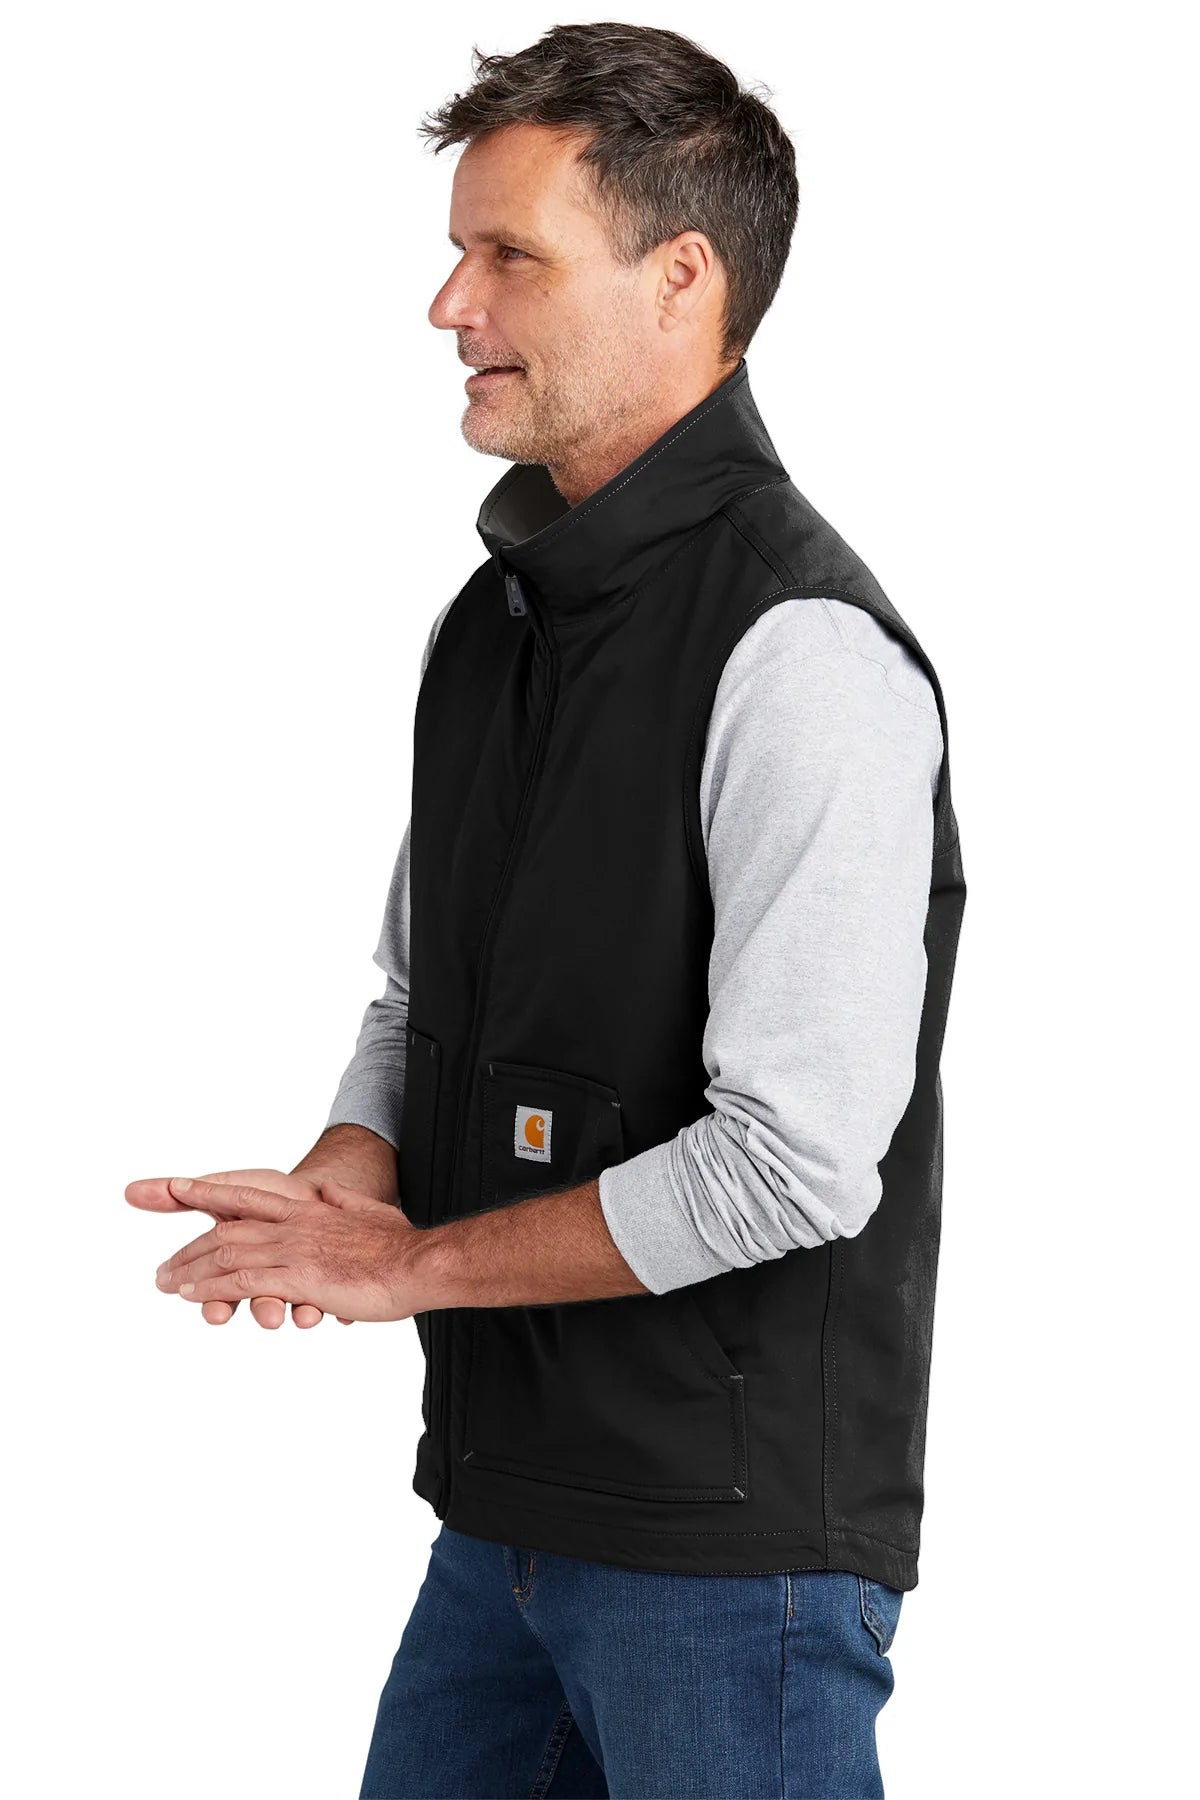 Carhartt Super Dux Soft Shell Customized Vests, Black